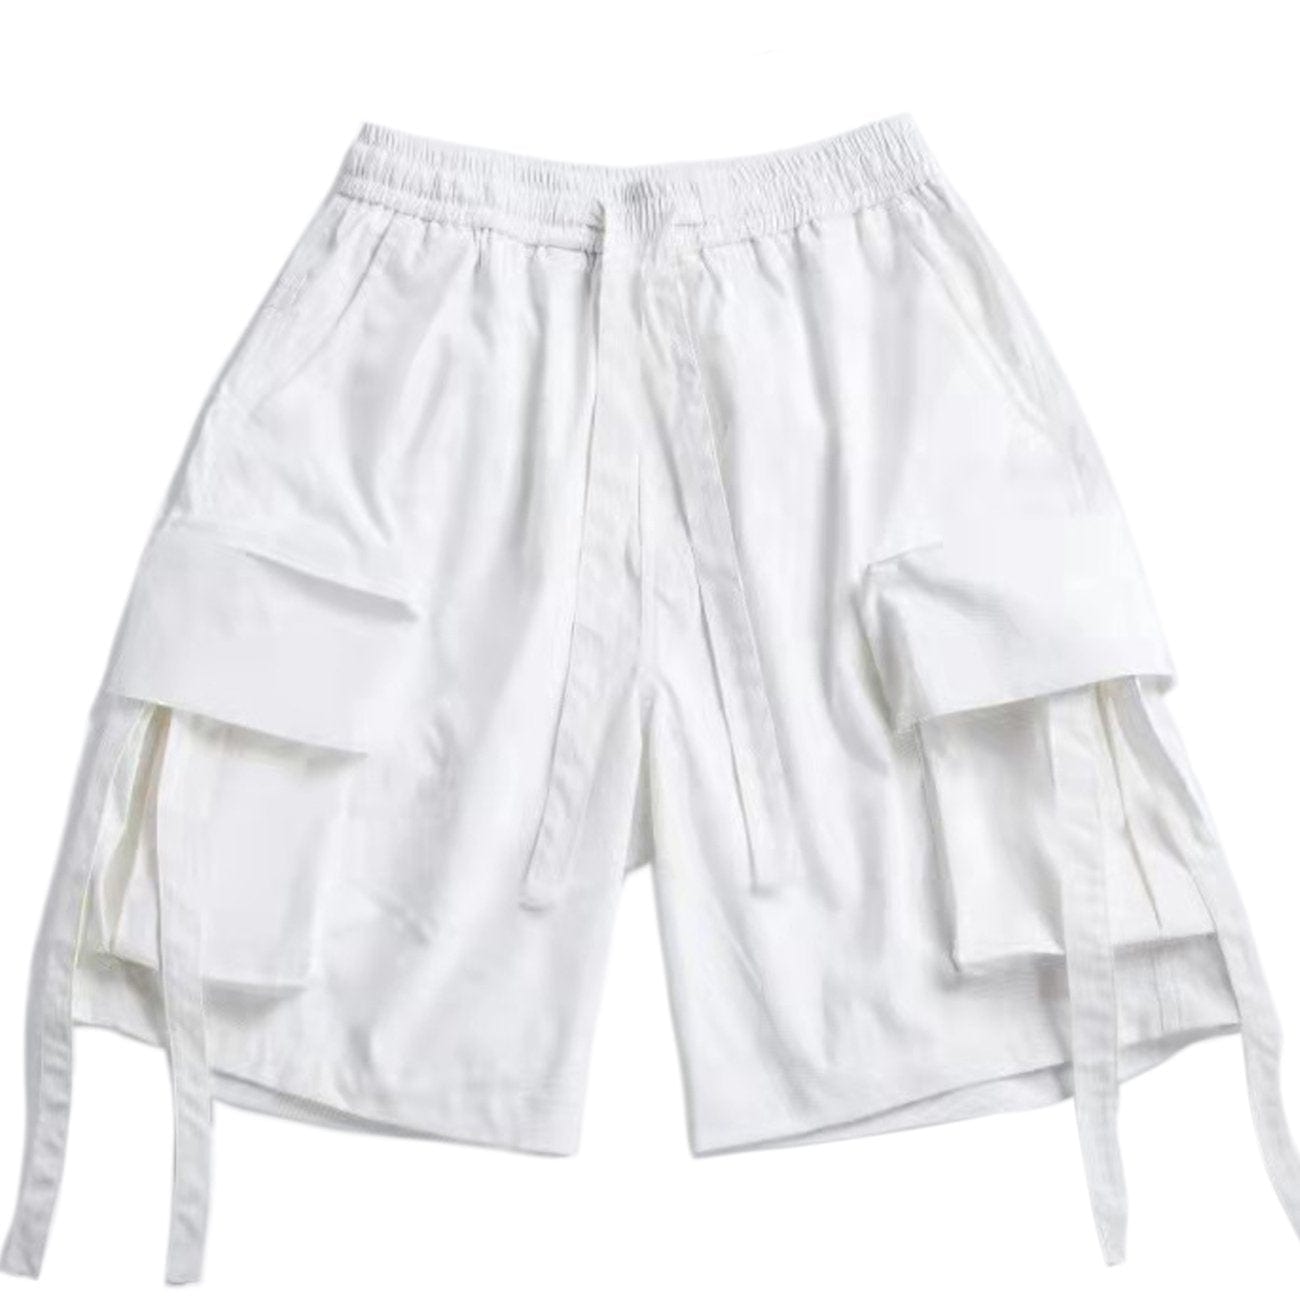 Multi Pockets Overalls Shorts Streetwear Brand Techwear Combat Tactical YUGEN THEORY